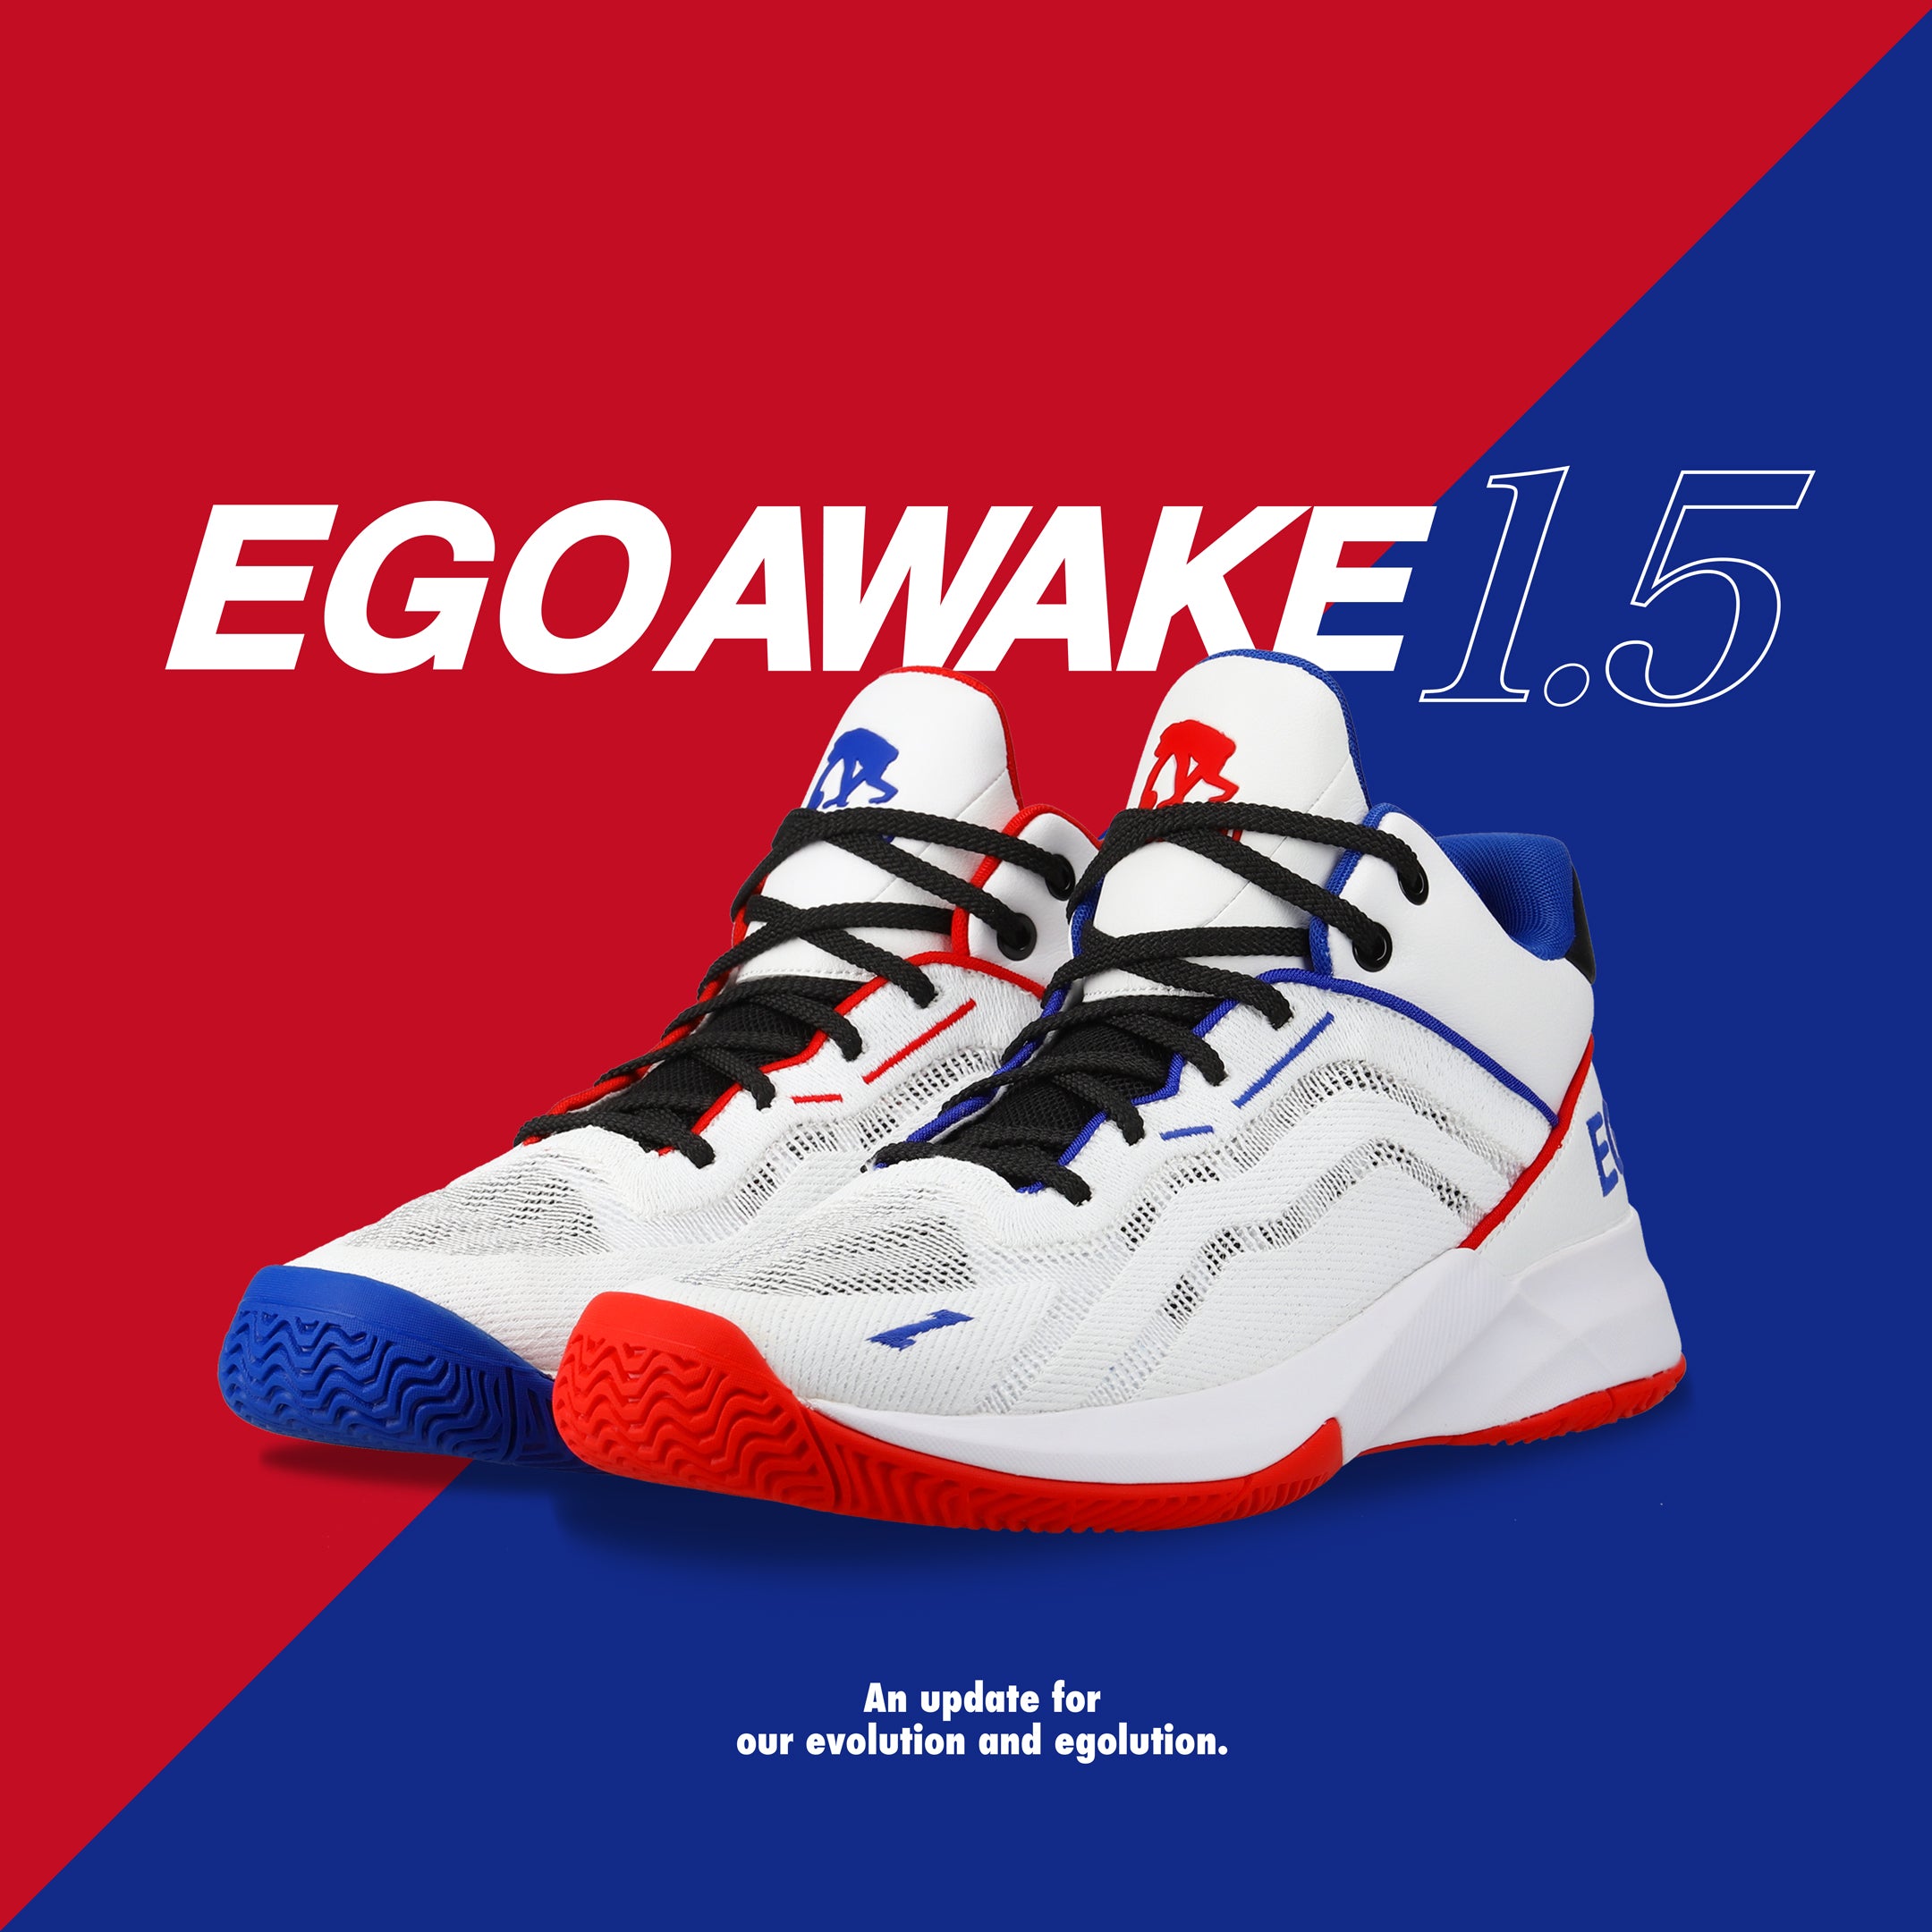 EGO AWAKE MID WHITE/CAMO エゴザル バッシュ 25.5 - バスケットボール